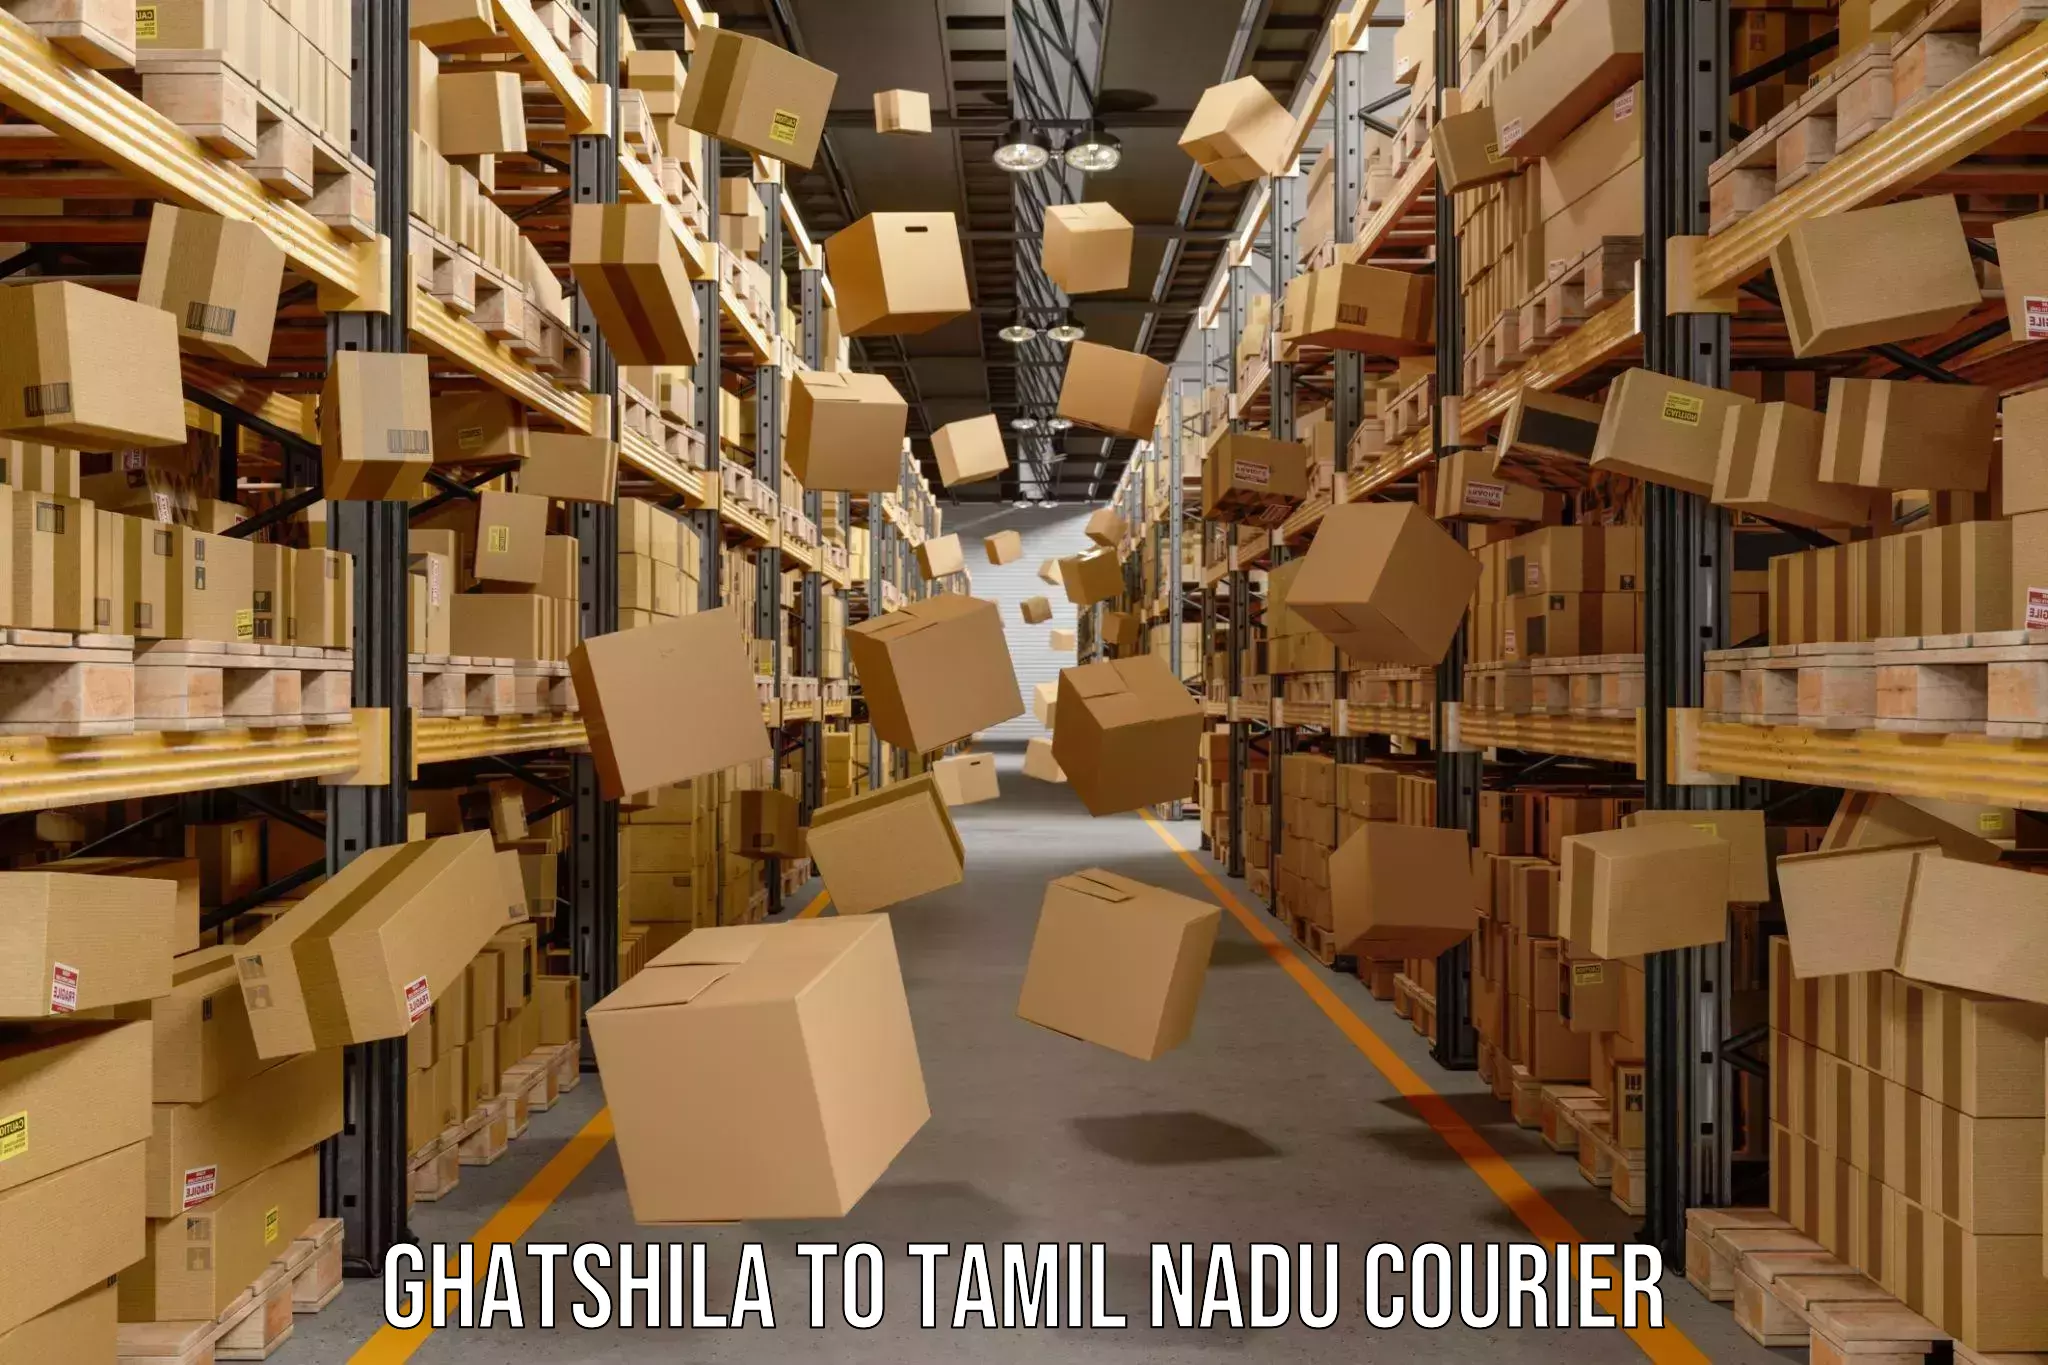 Digital courier platforms Ghatshila to Tamil Nadu